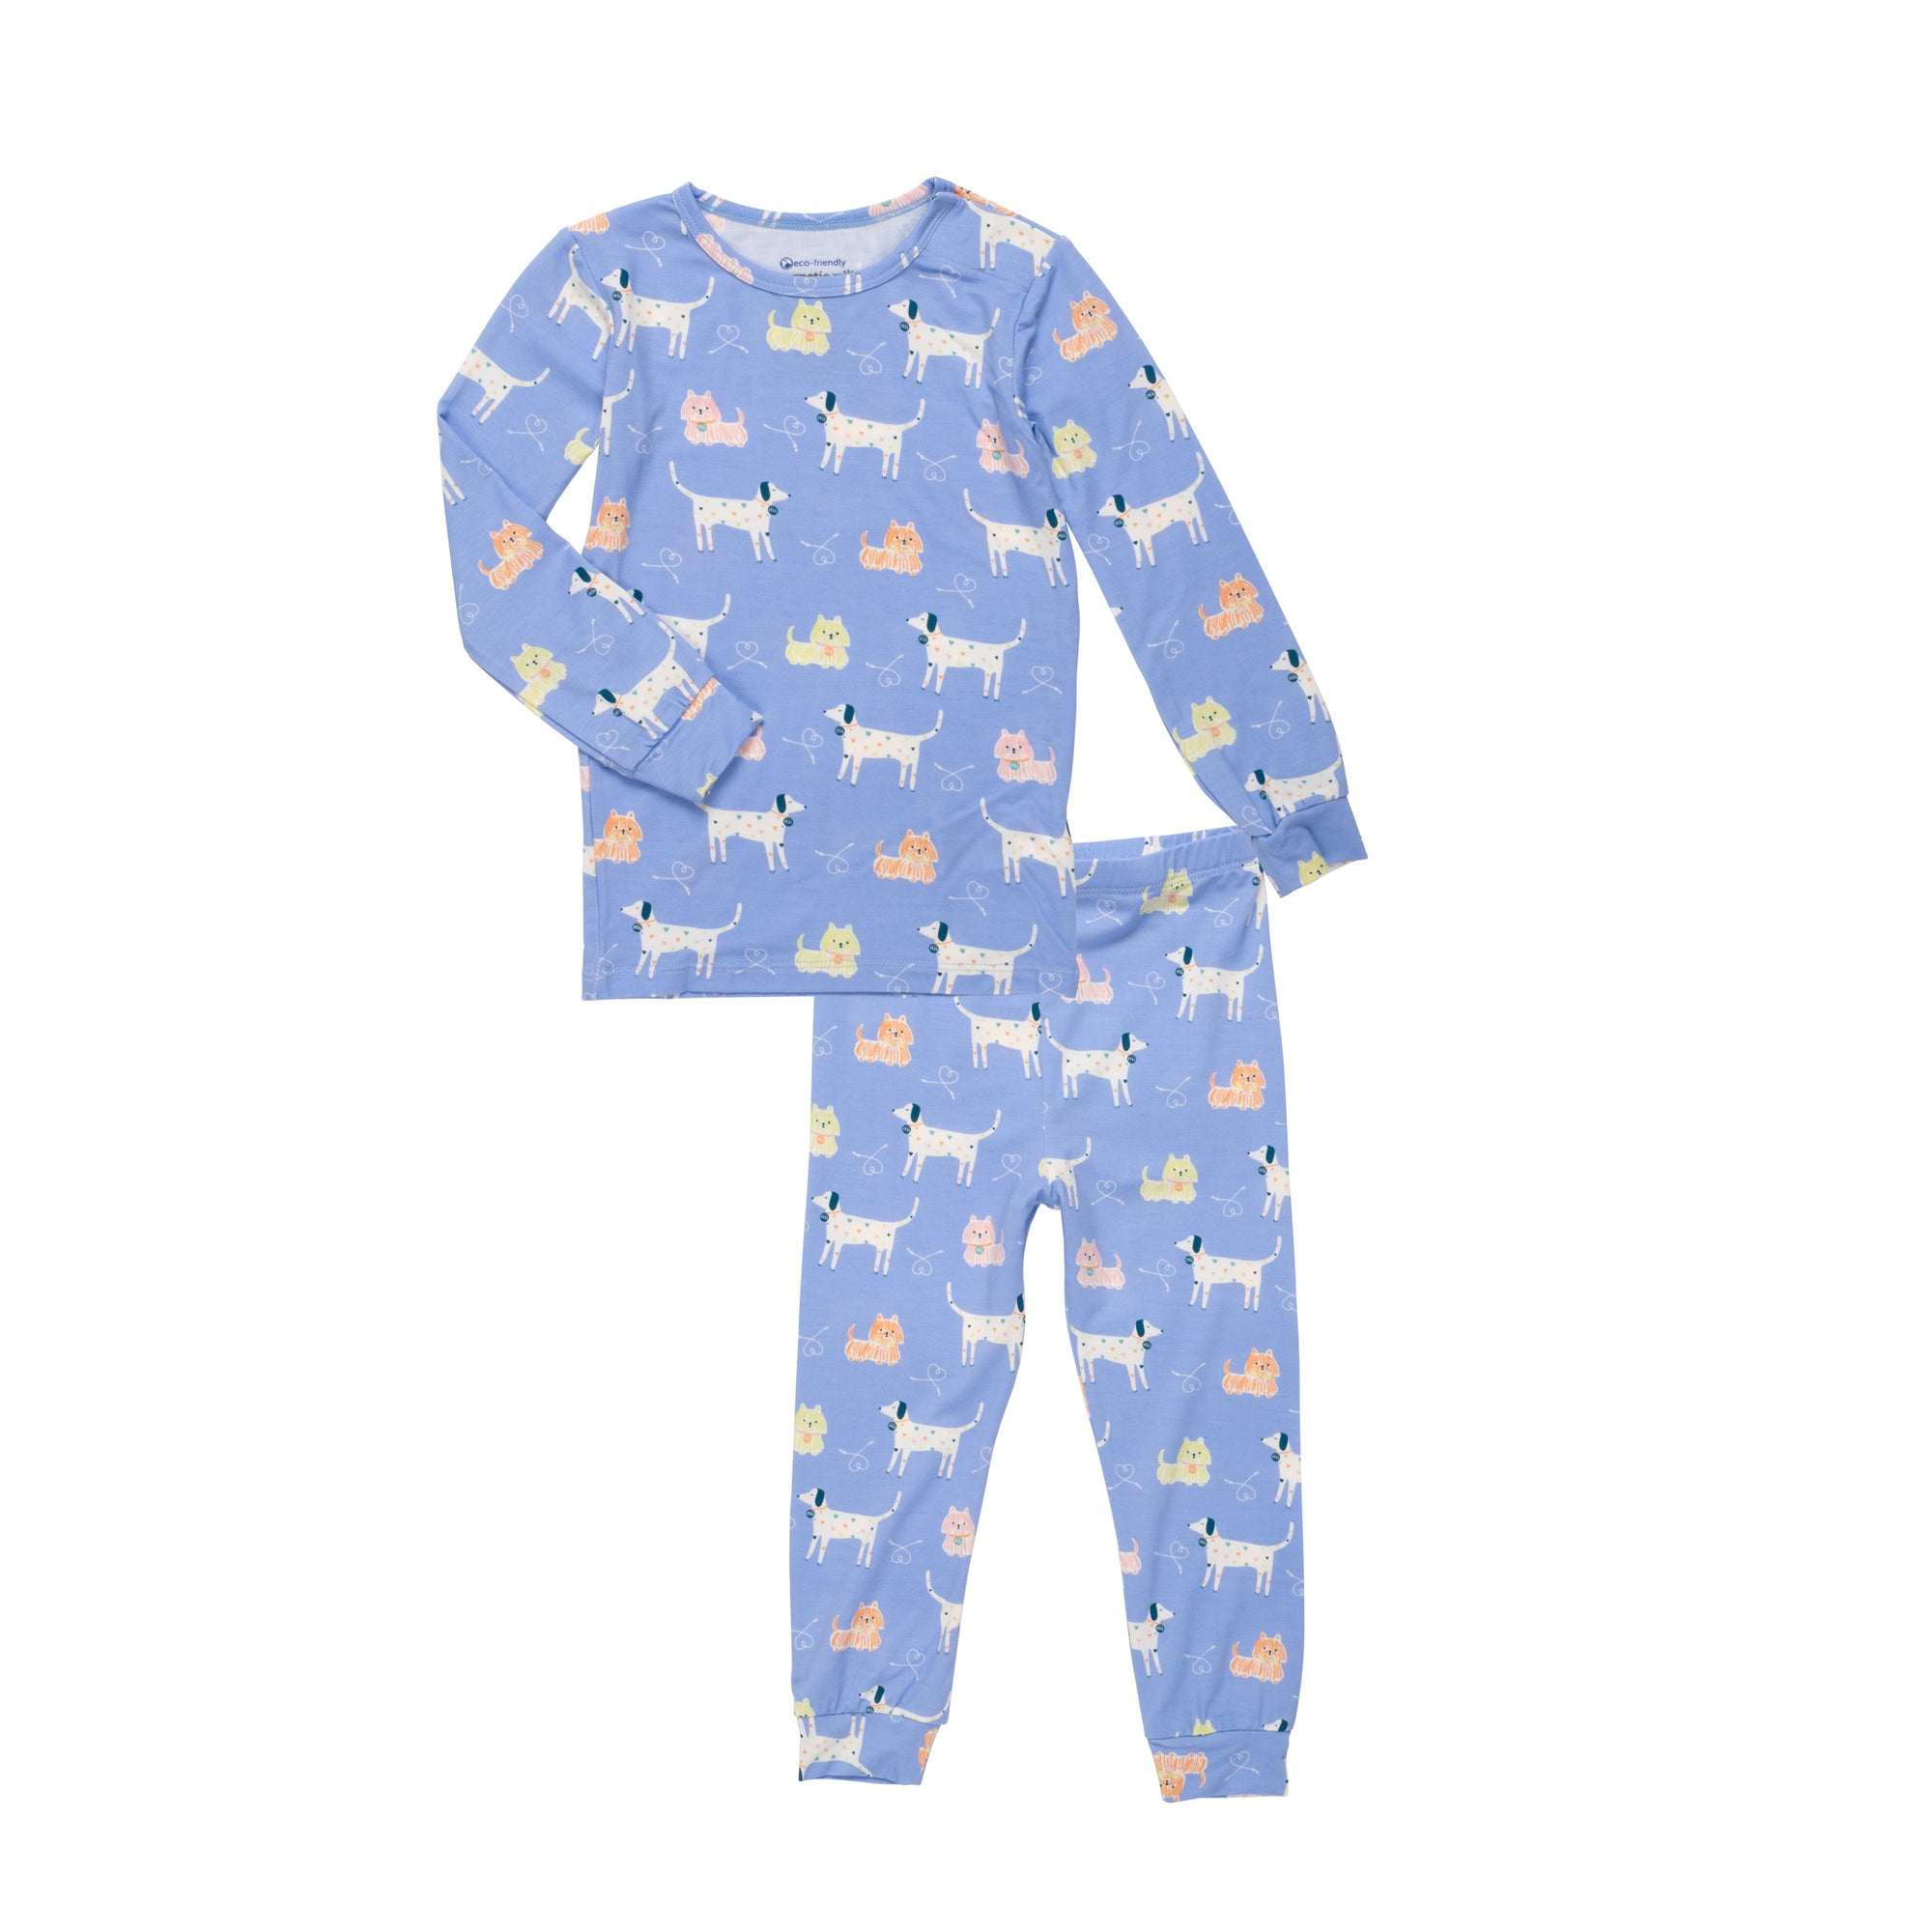 Magnetic Me Modal Magnetic Toddler Pajama Set / Leash on Life